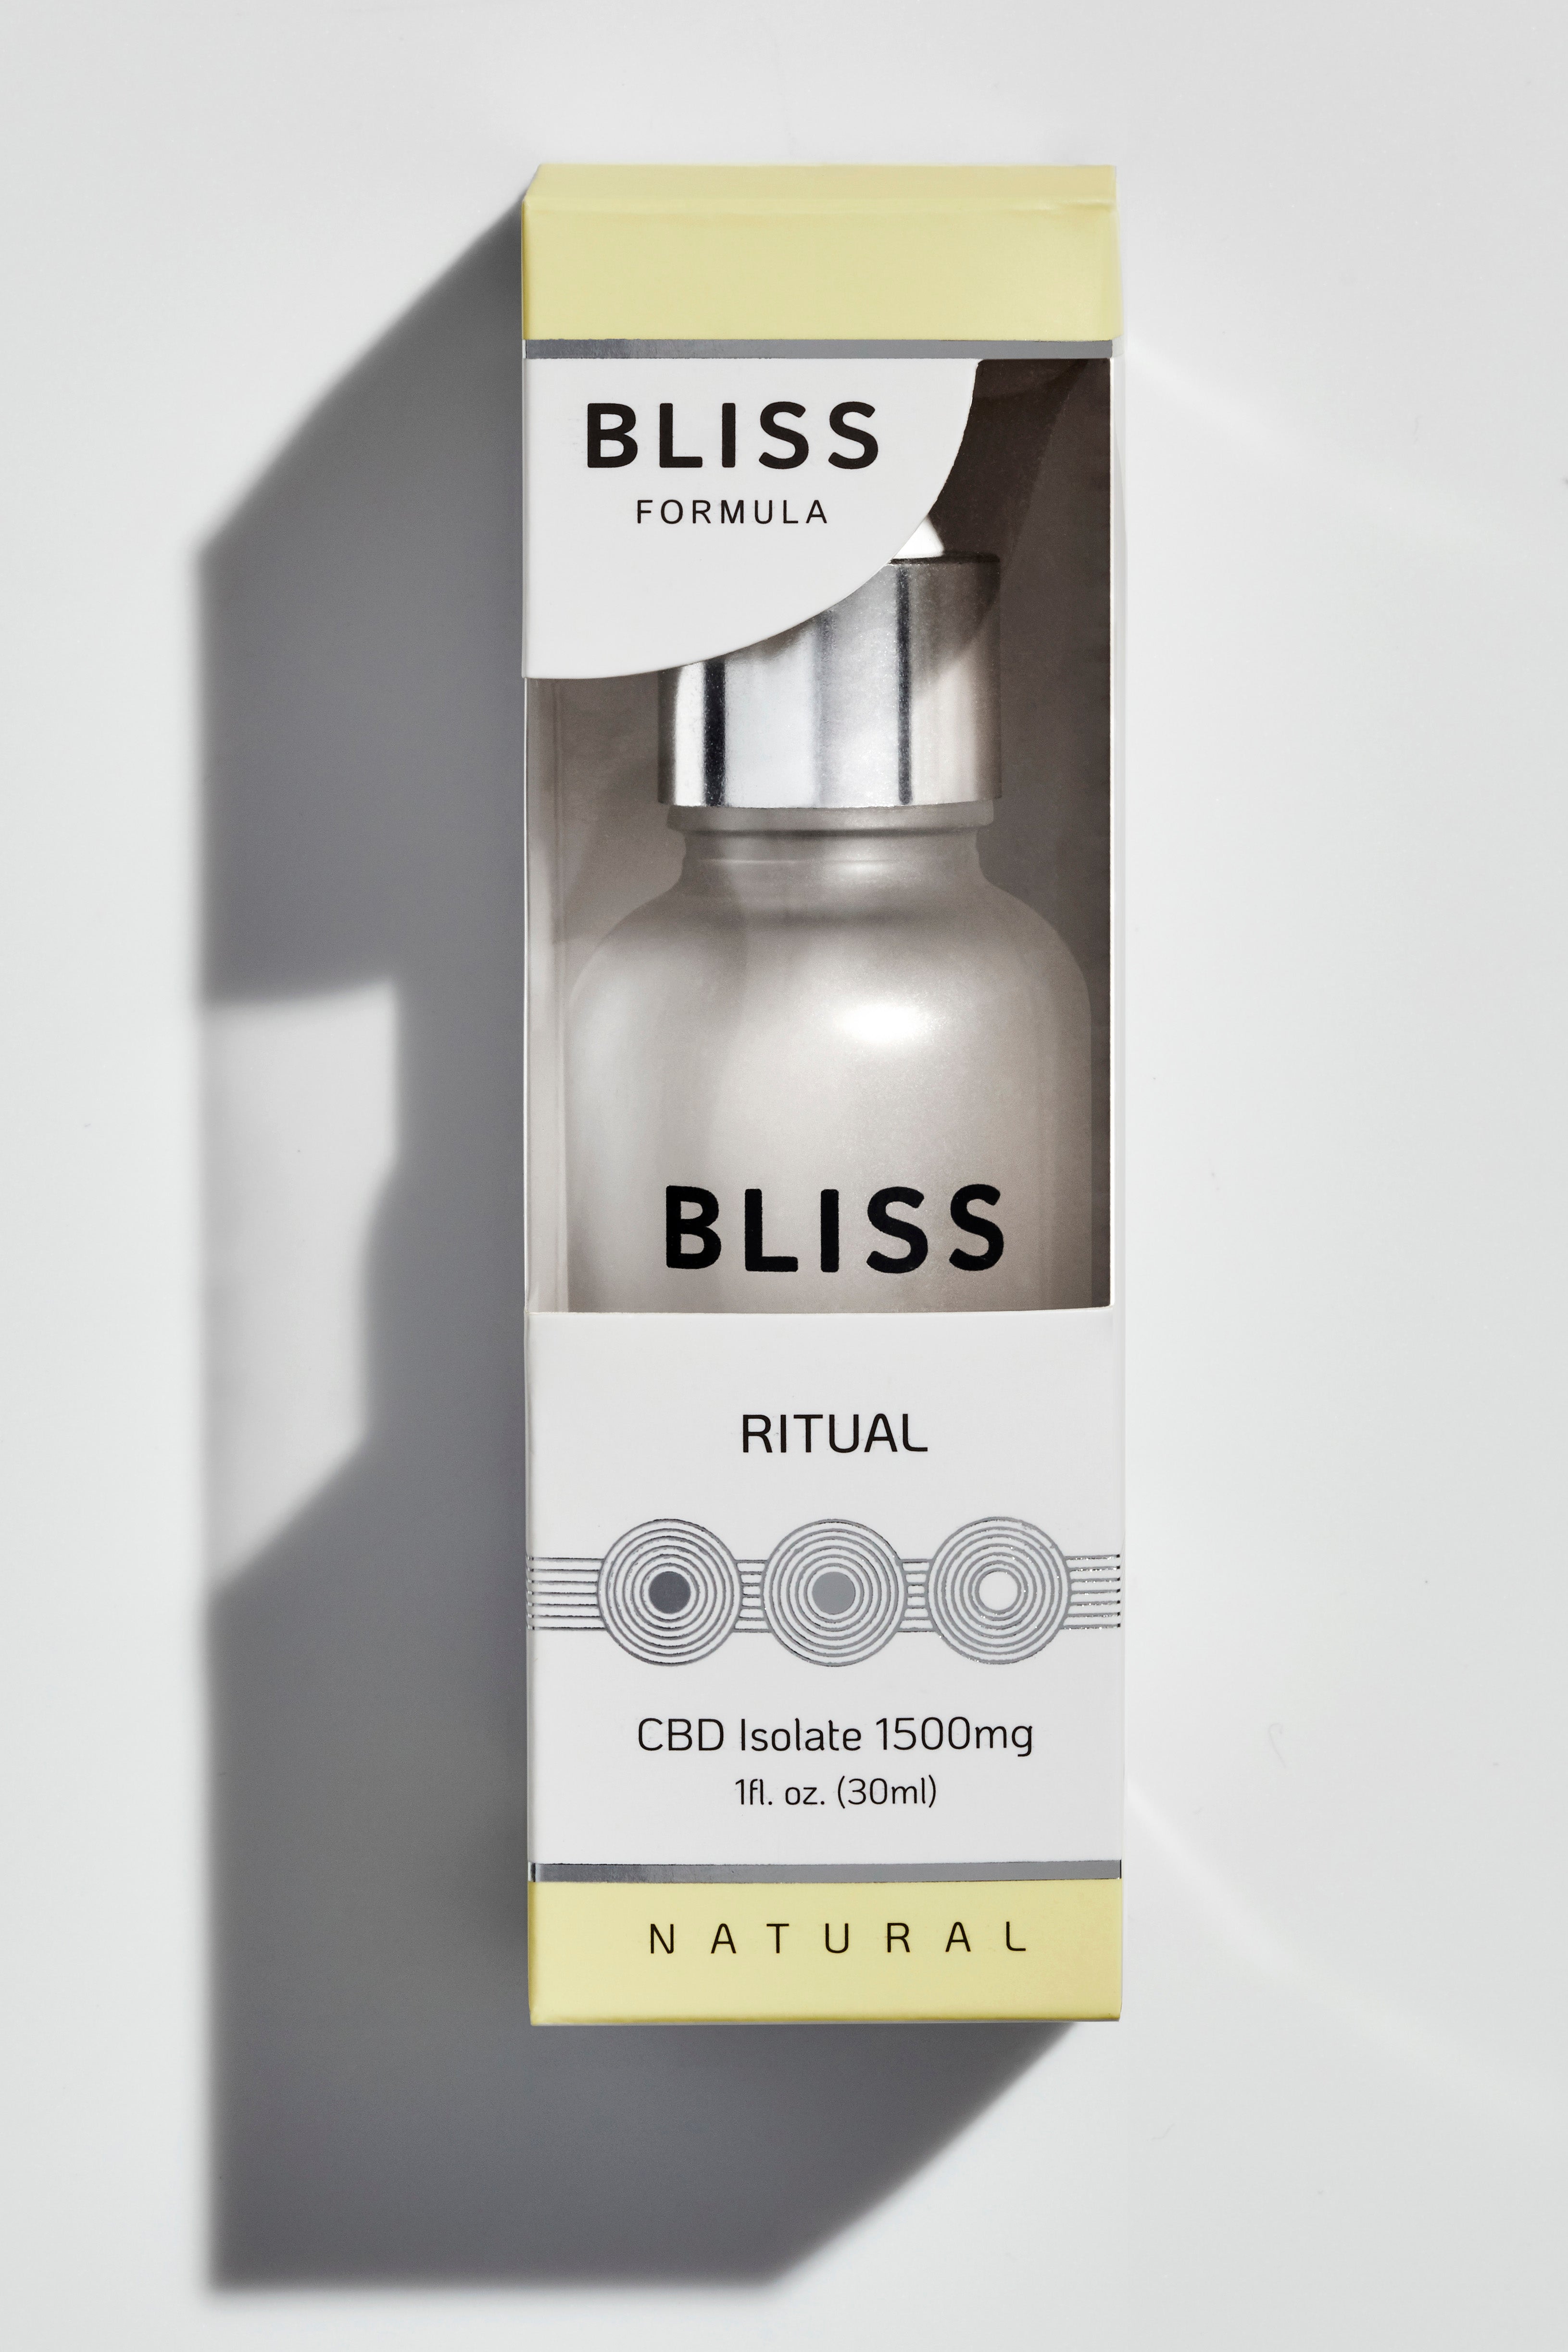 CBD Ritual bliss formula